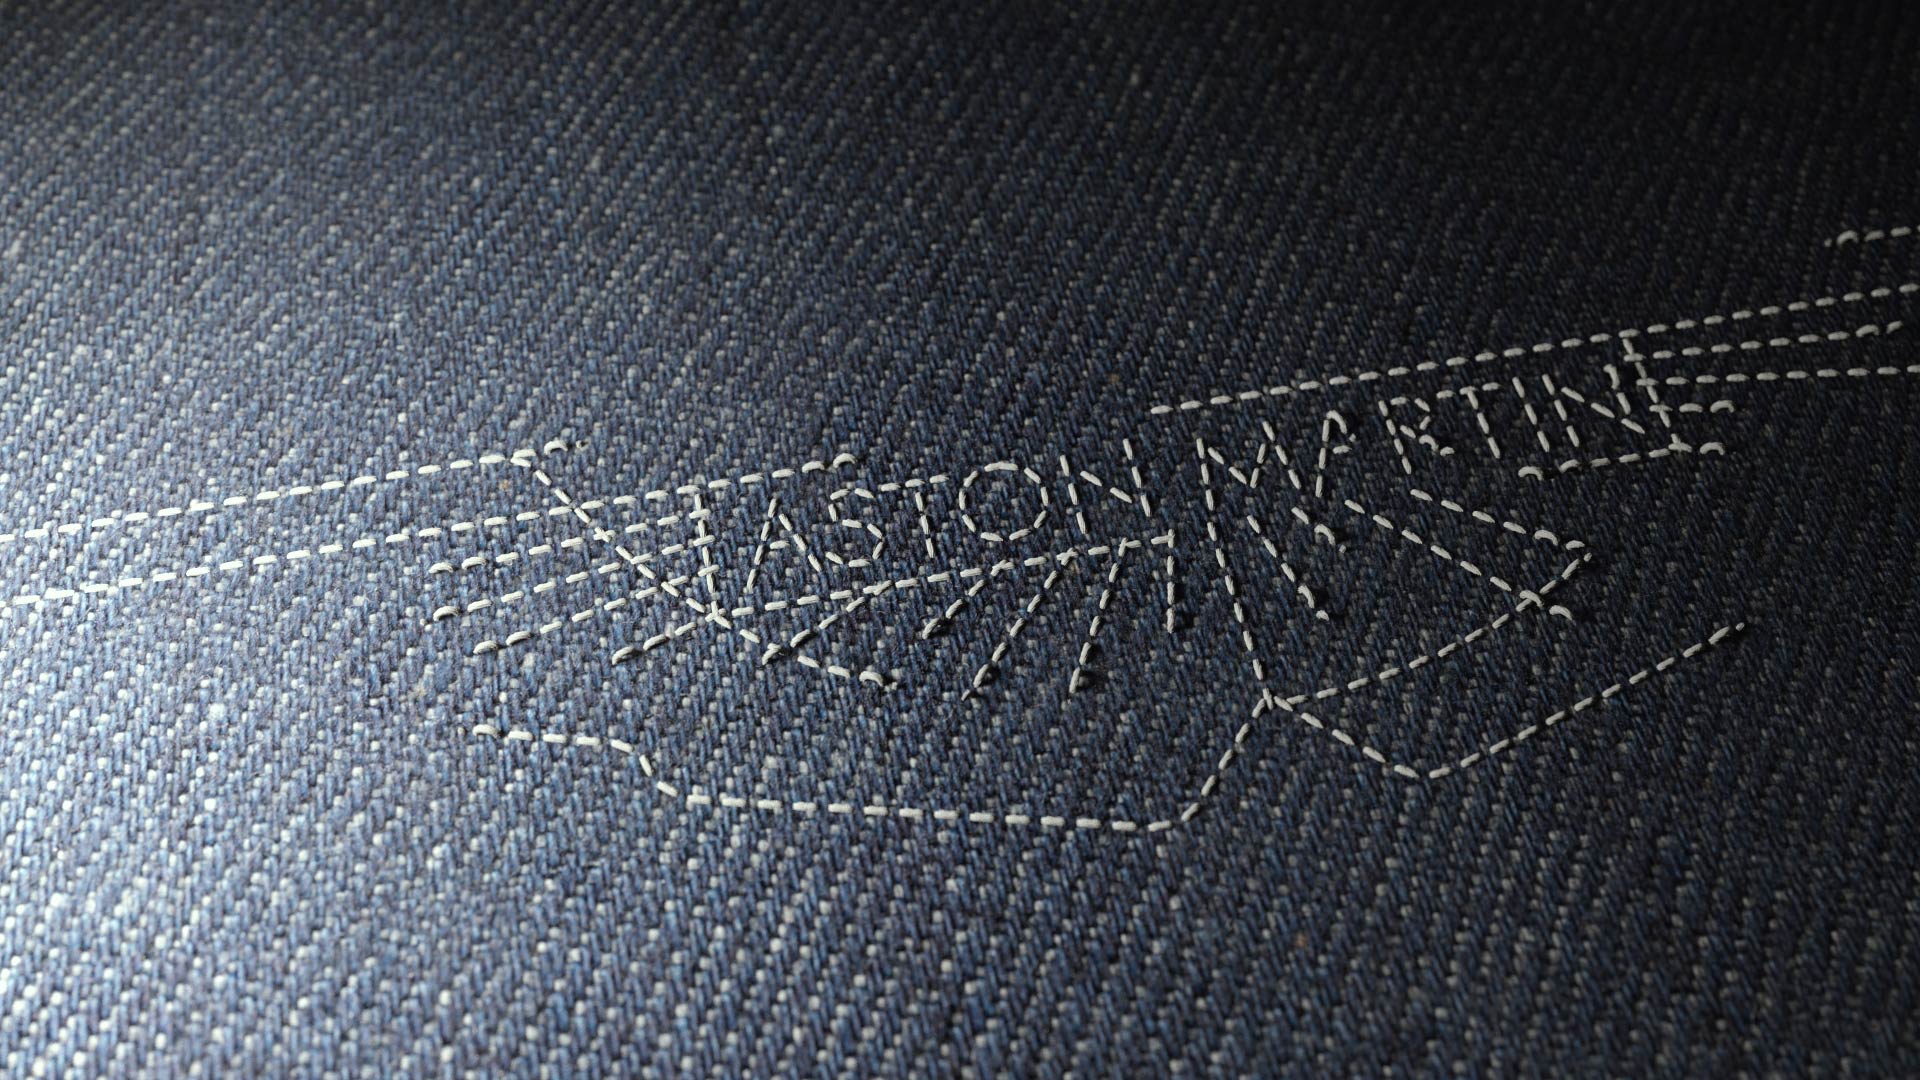 Aston martin logo designed by threads on denim